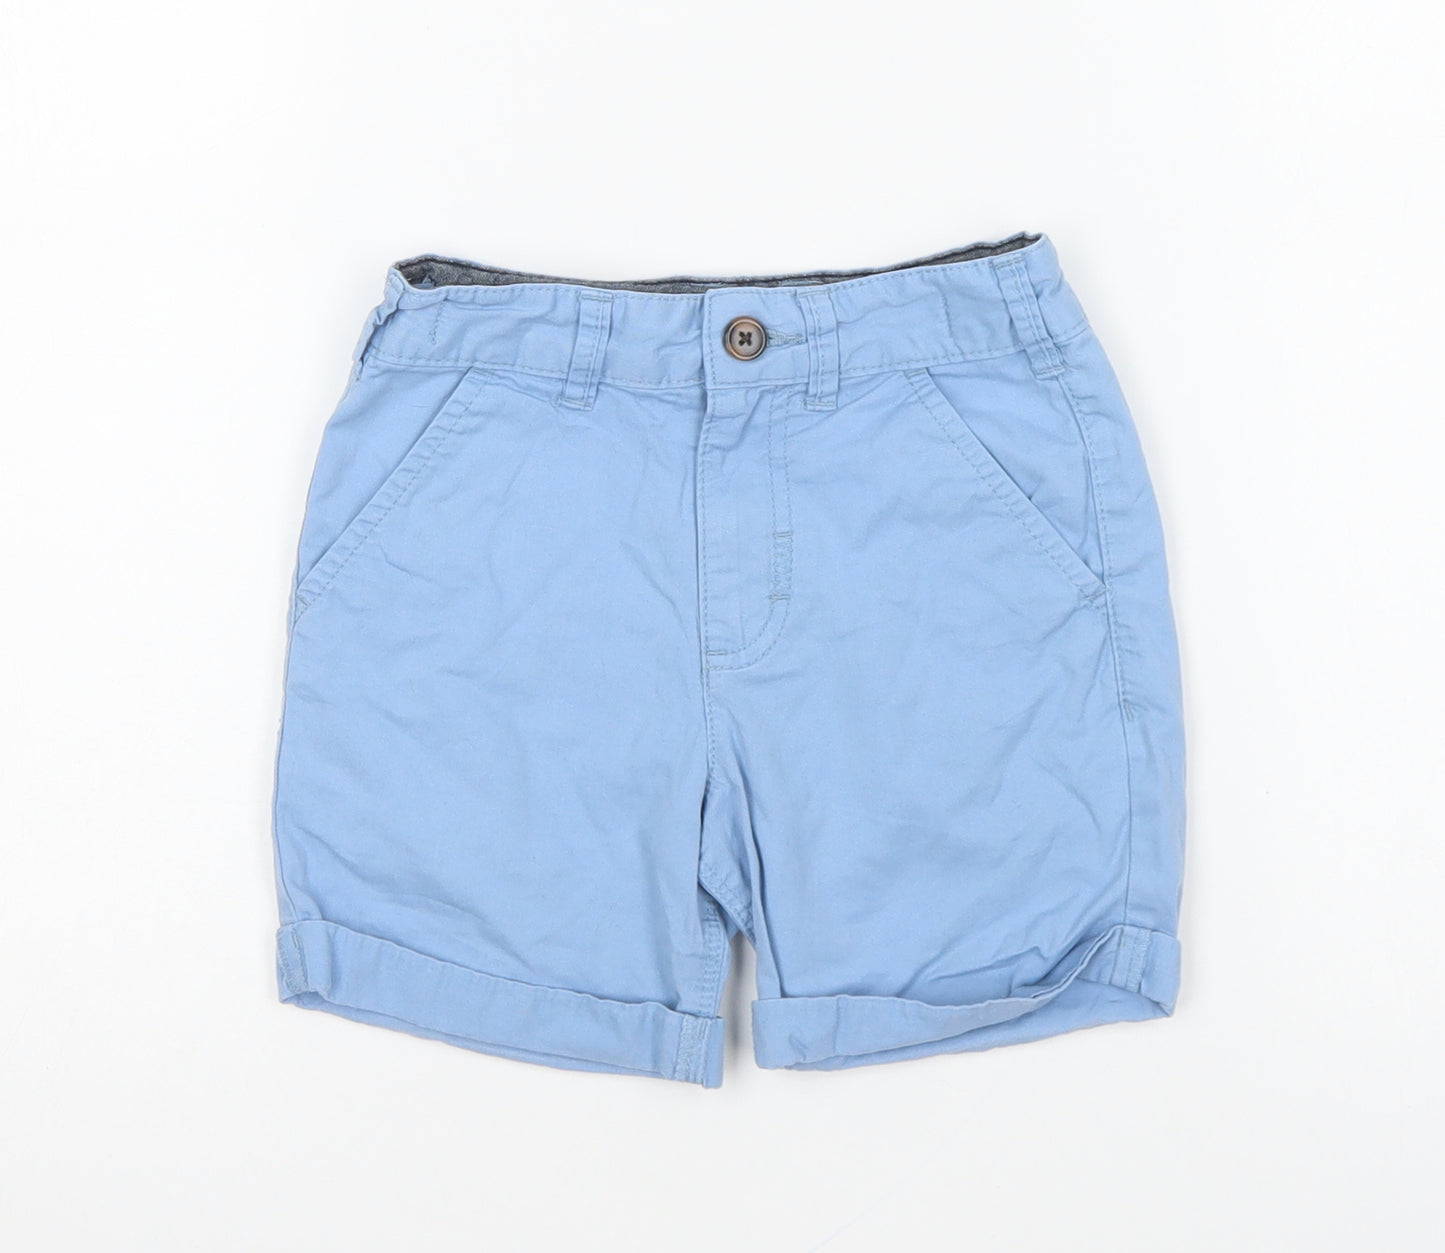 George Boys Blue Cotton Chino Shorts Size 4-5 Years Regular